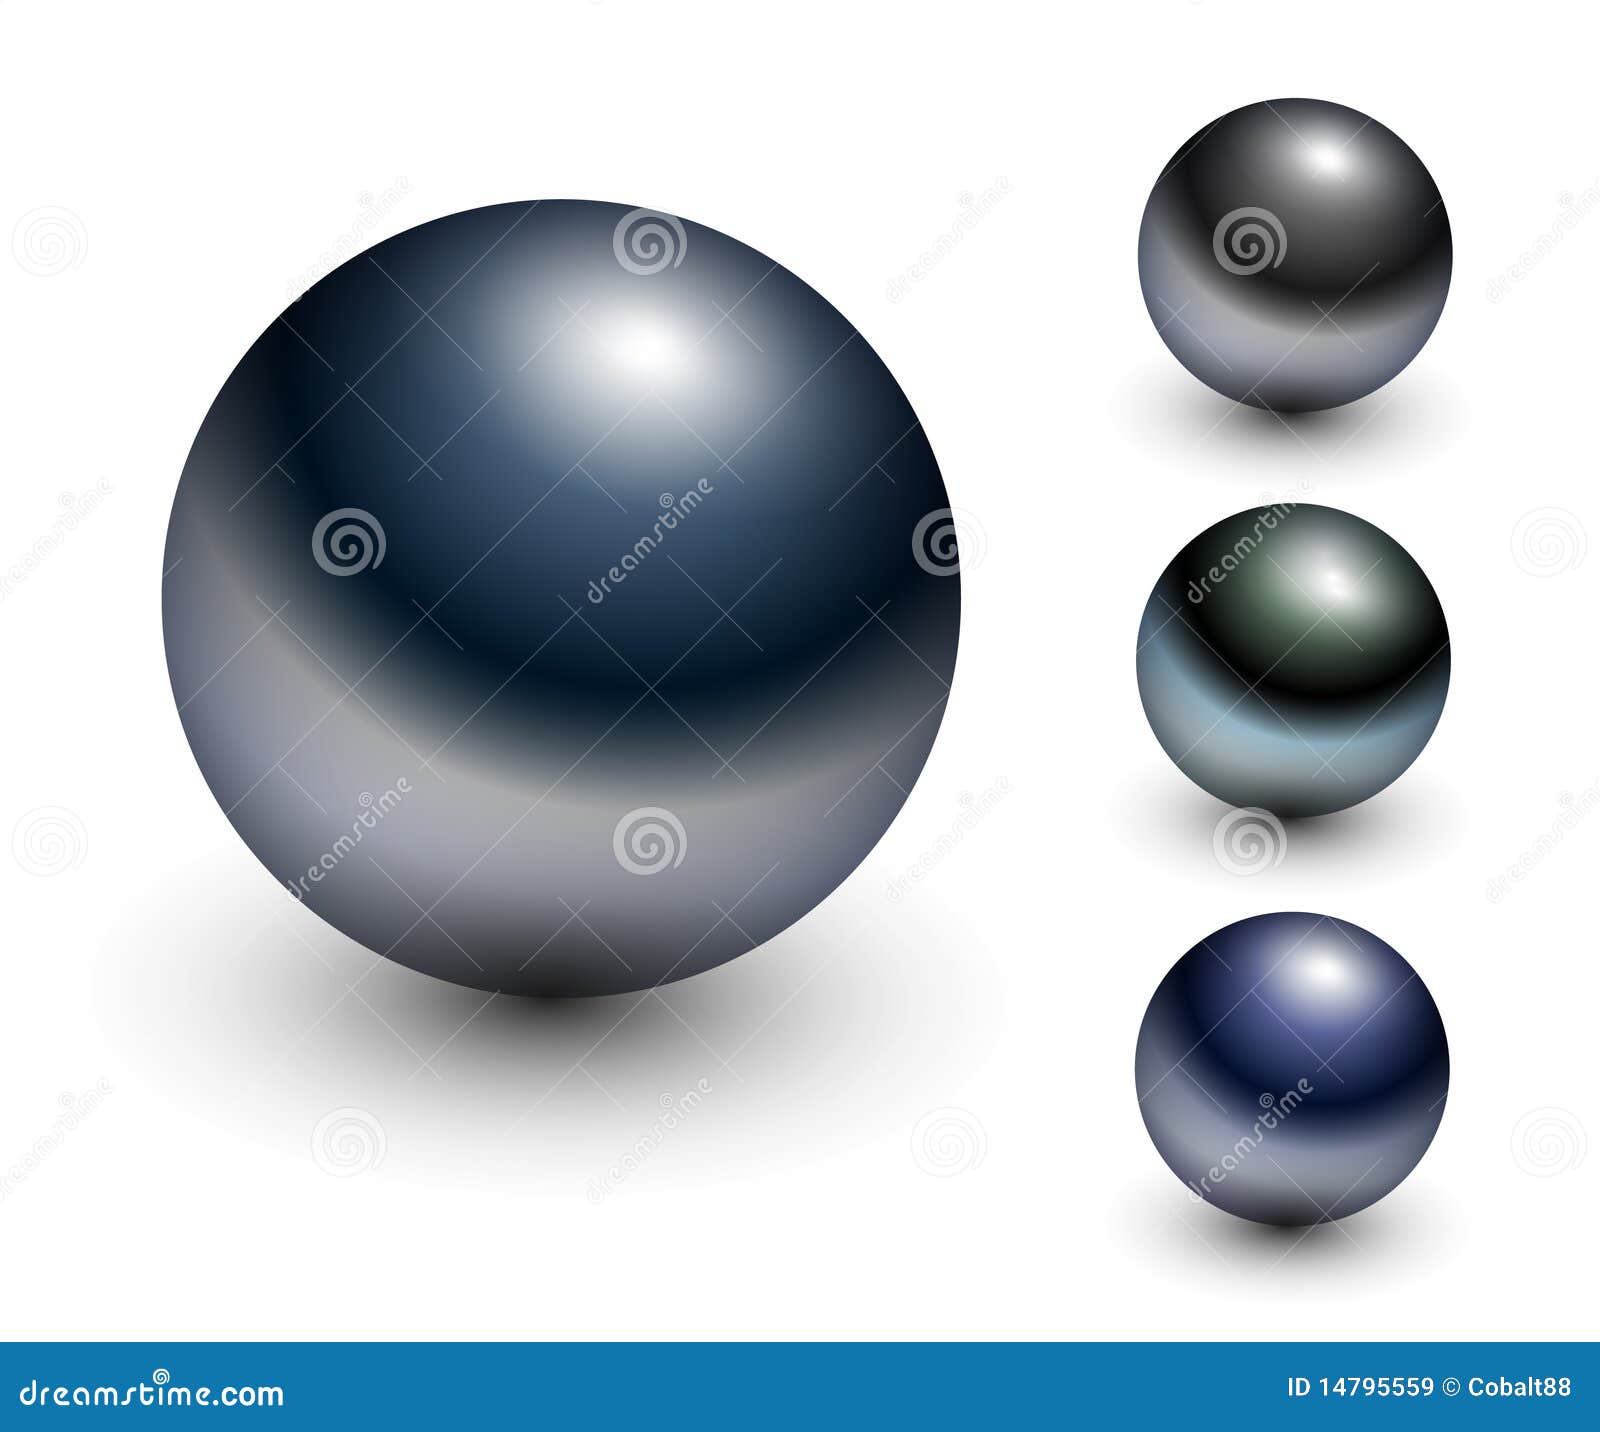 chrome sphere